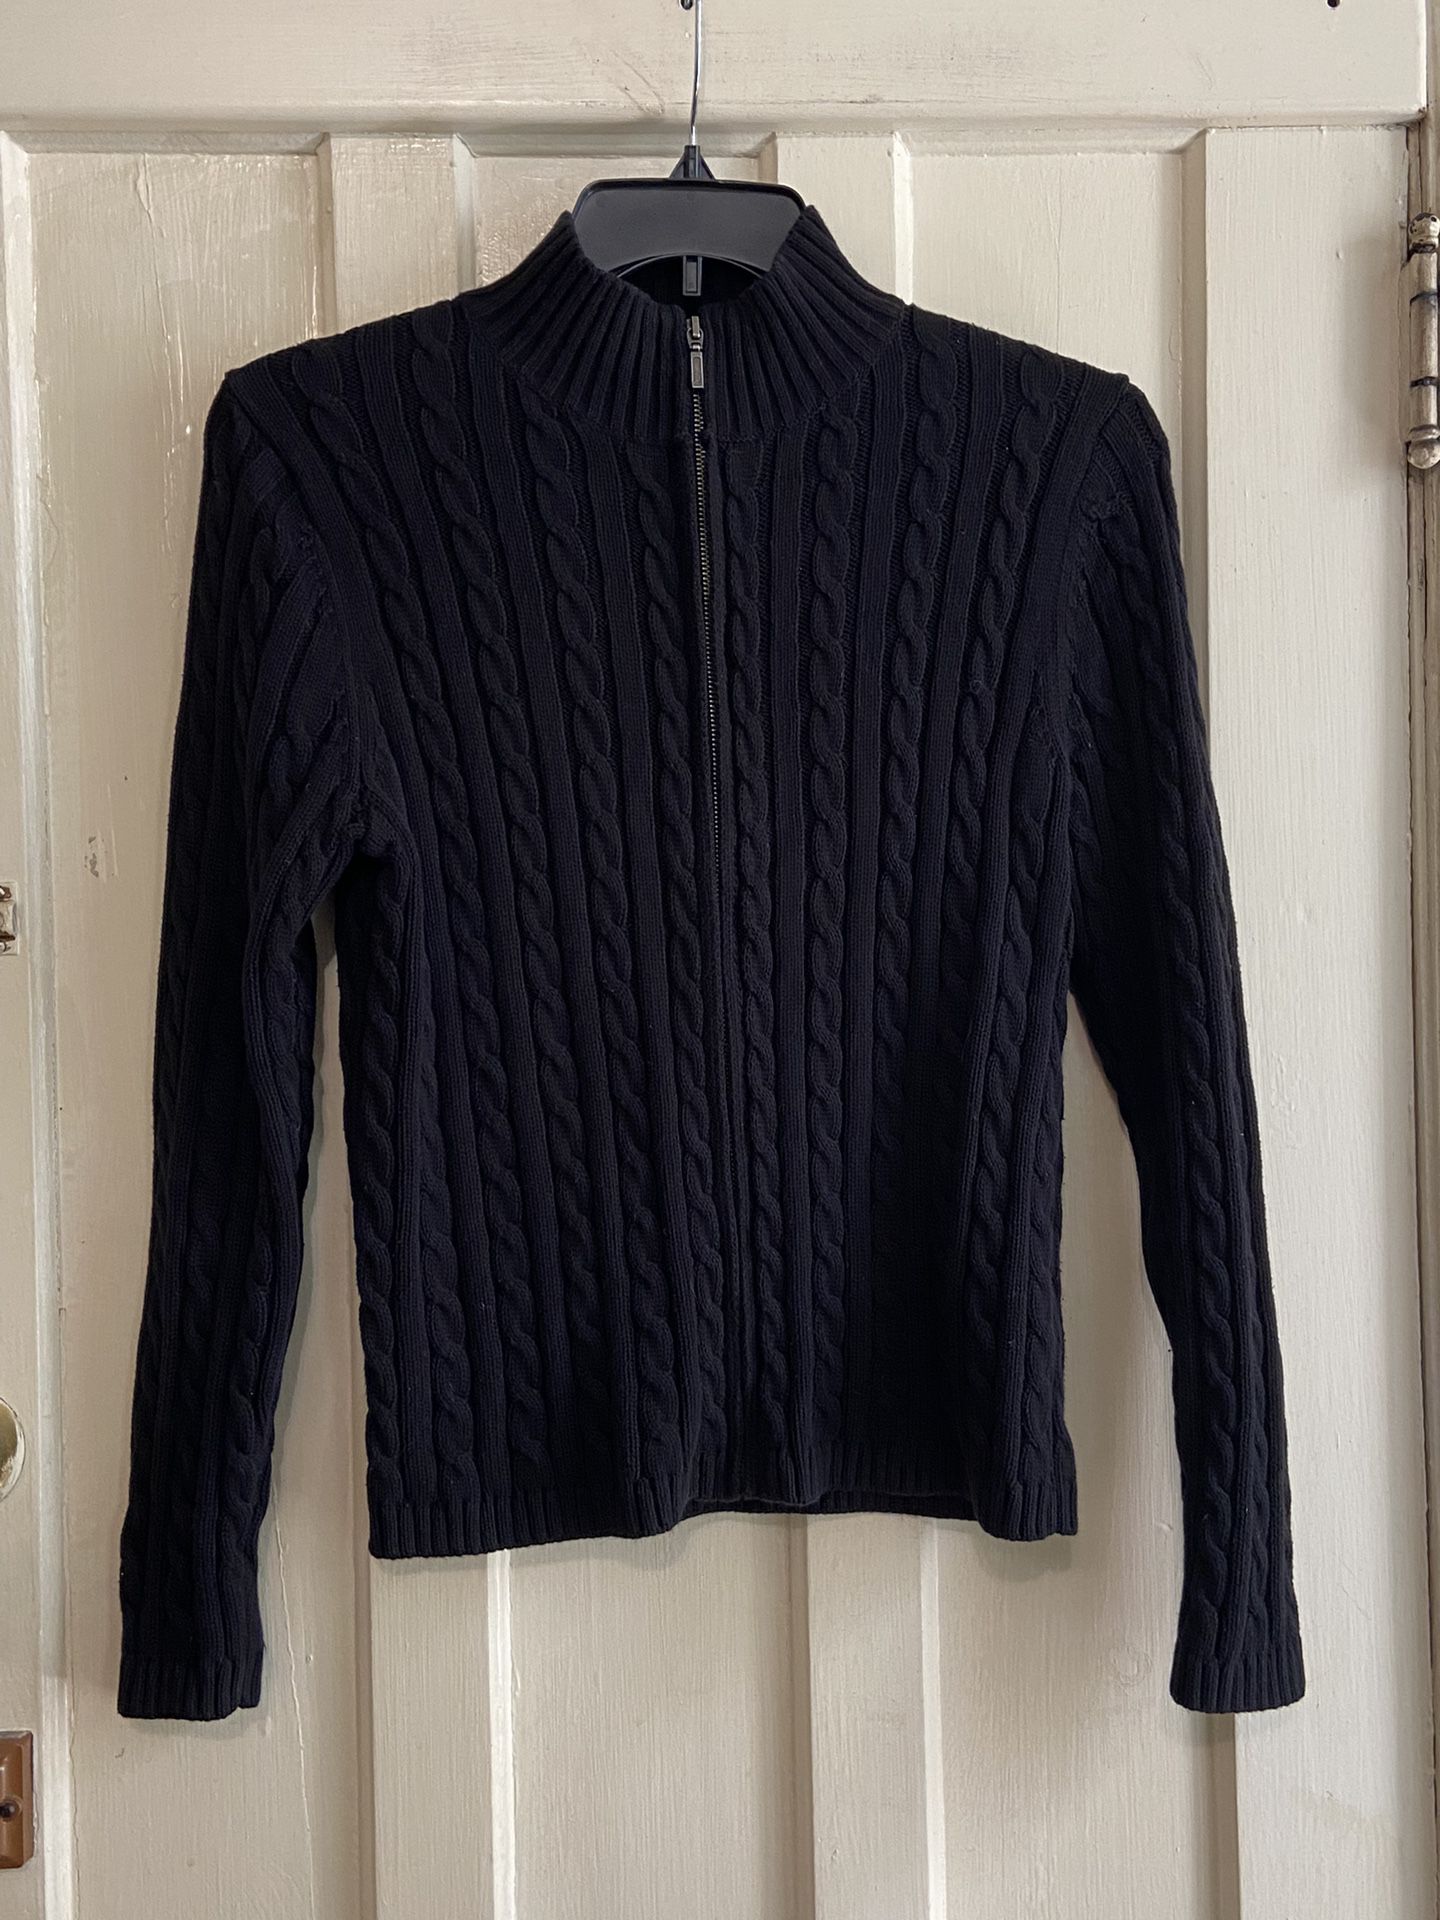 L.L.Bean women’s cable knit zip up sweater Medium